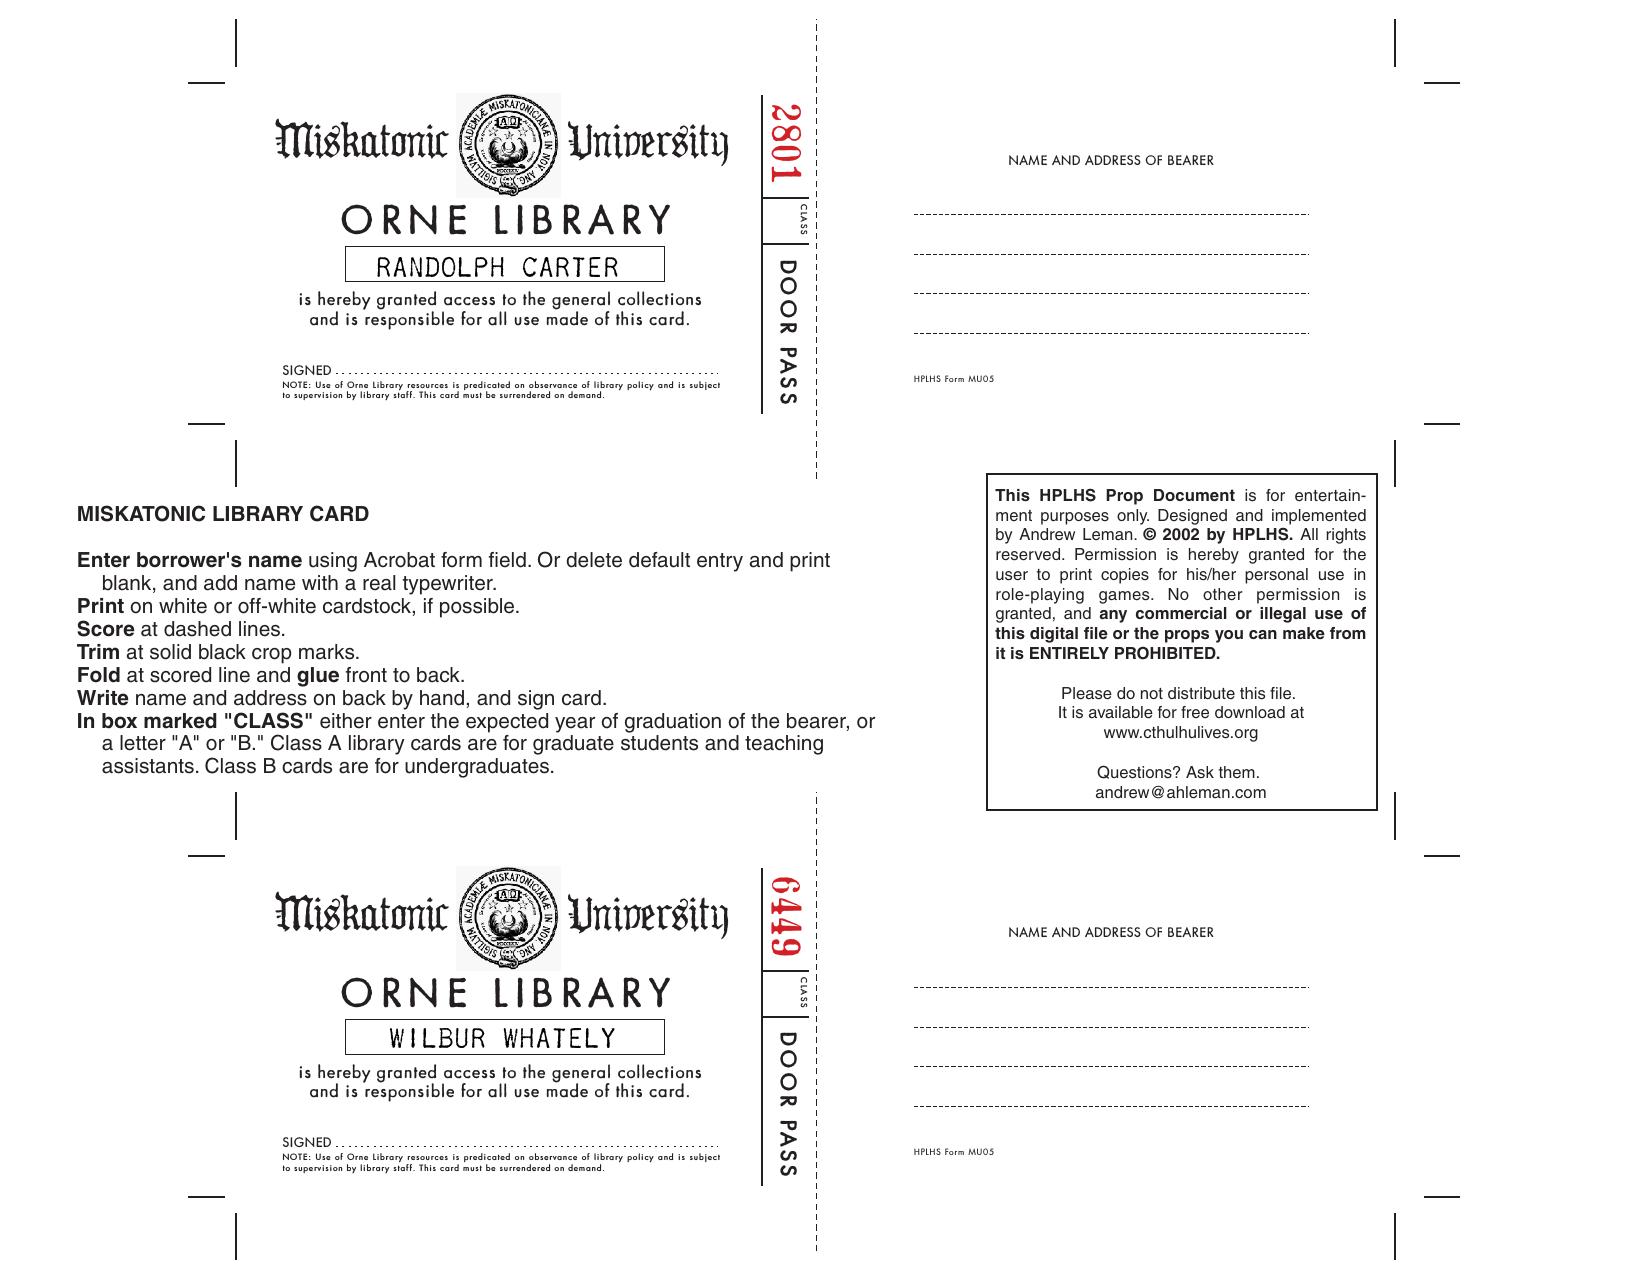 CoC Miskatonic University Library Card